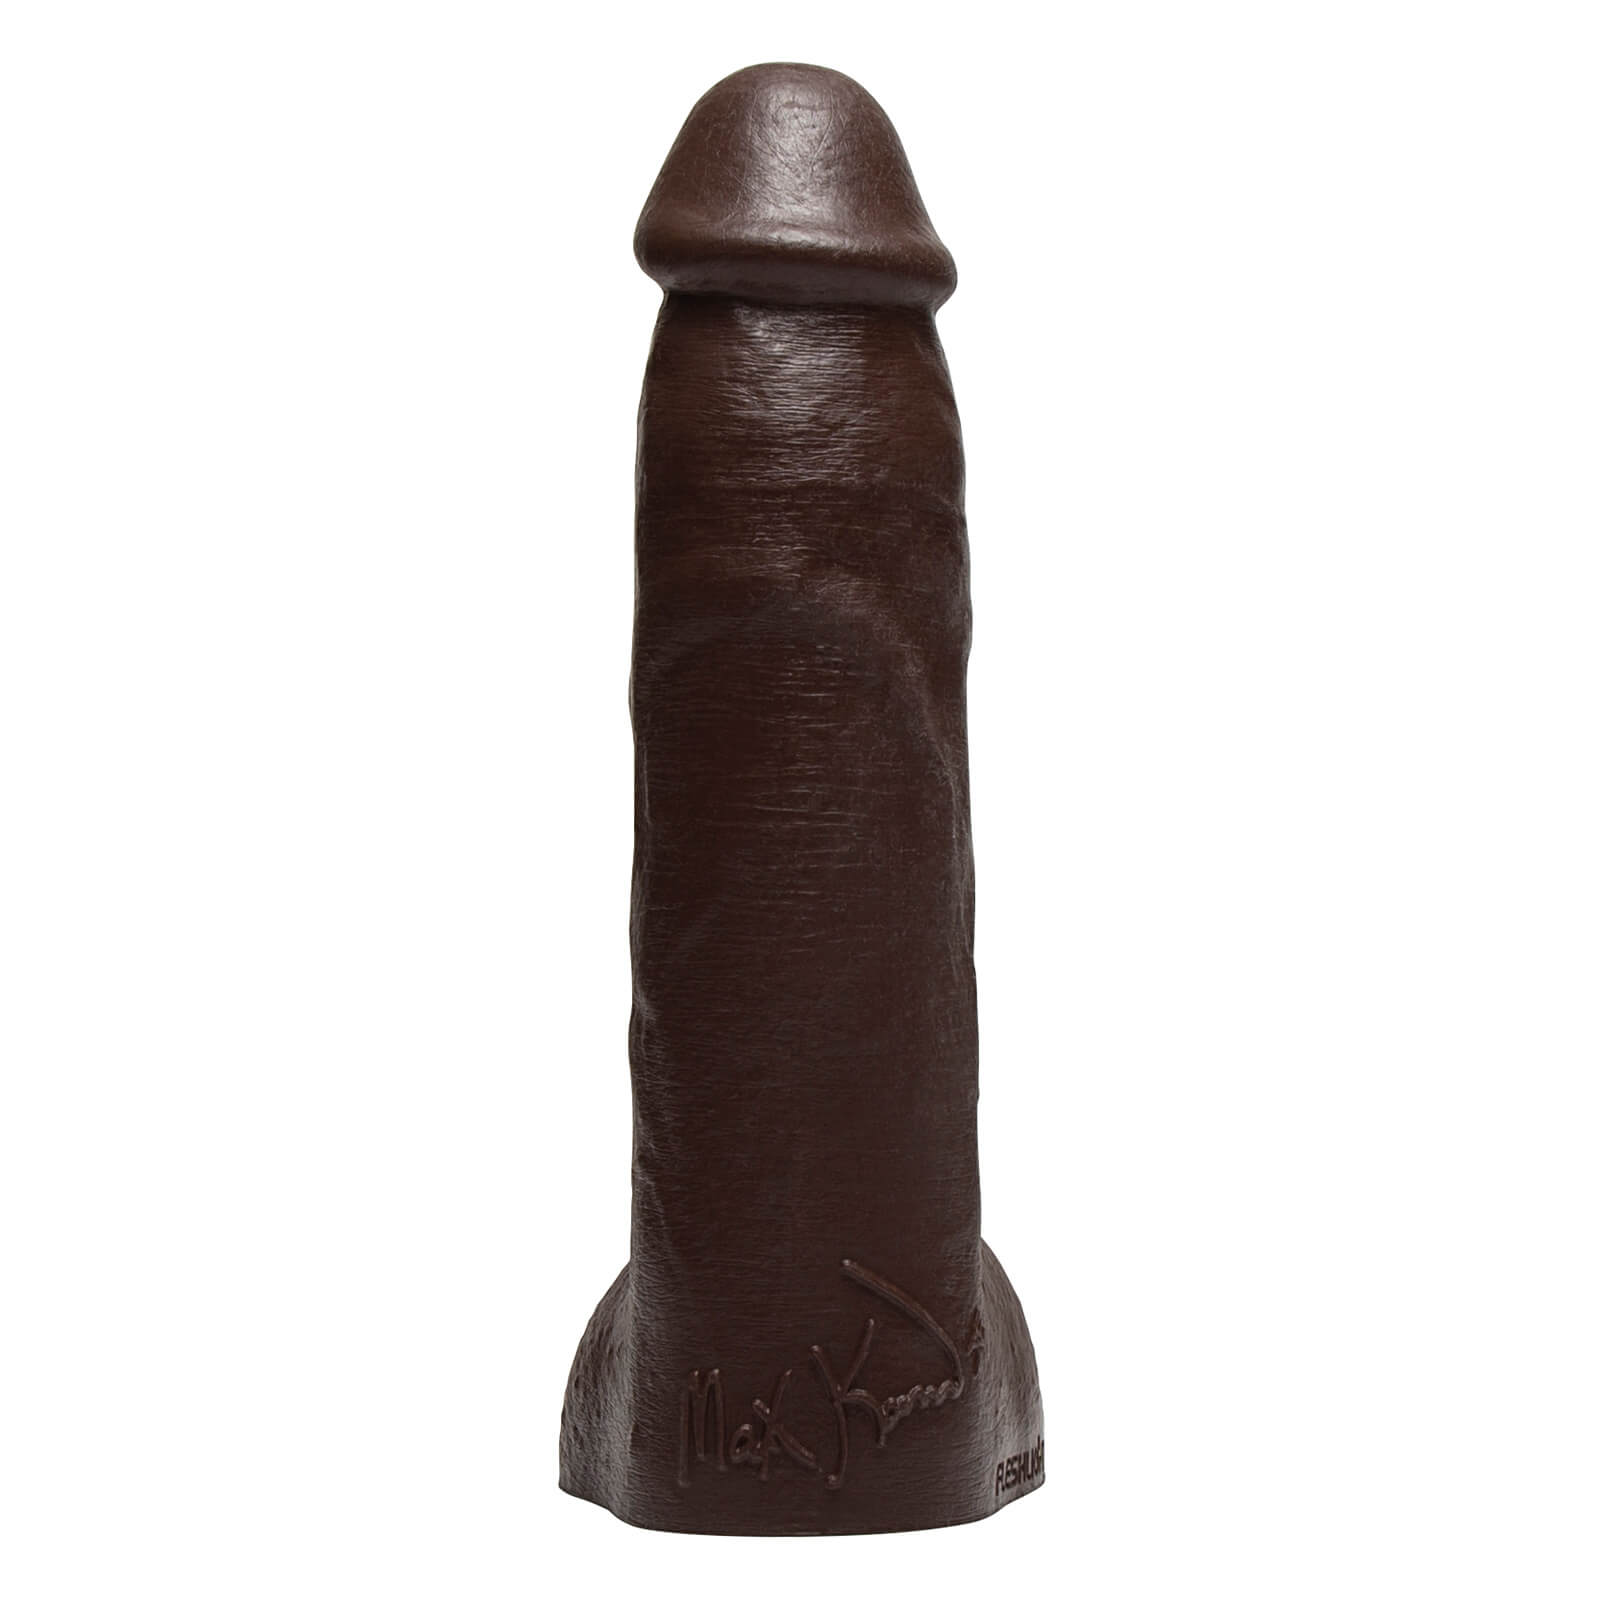 Fleshjack Boys Max Konnor Dildo (20,5 cm), originální kopie penisu